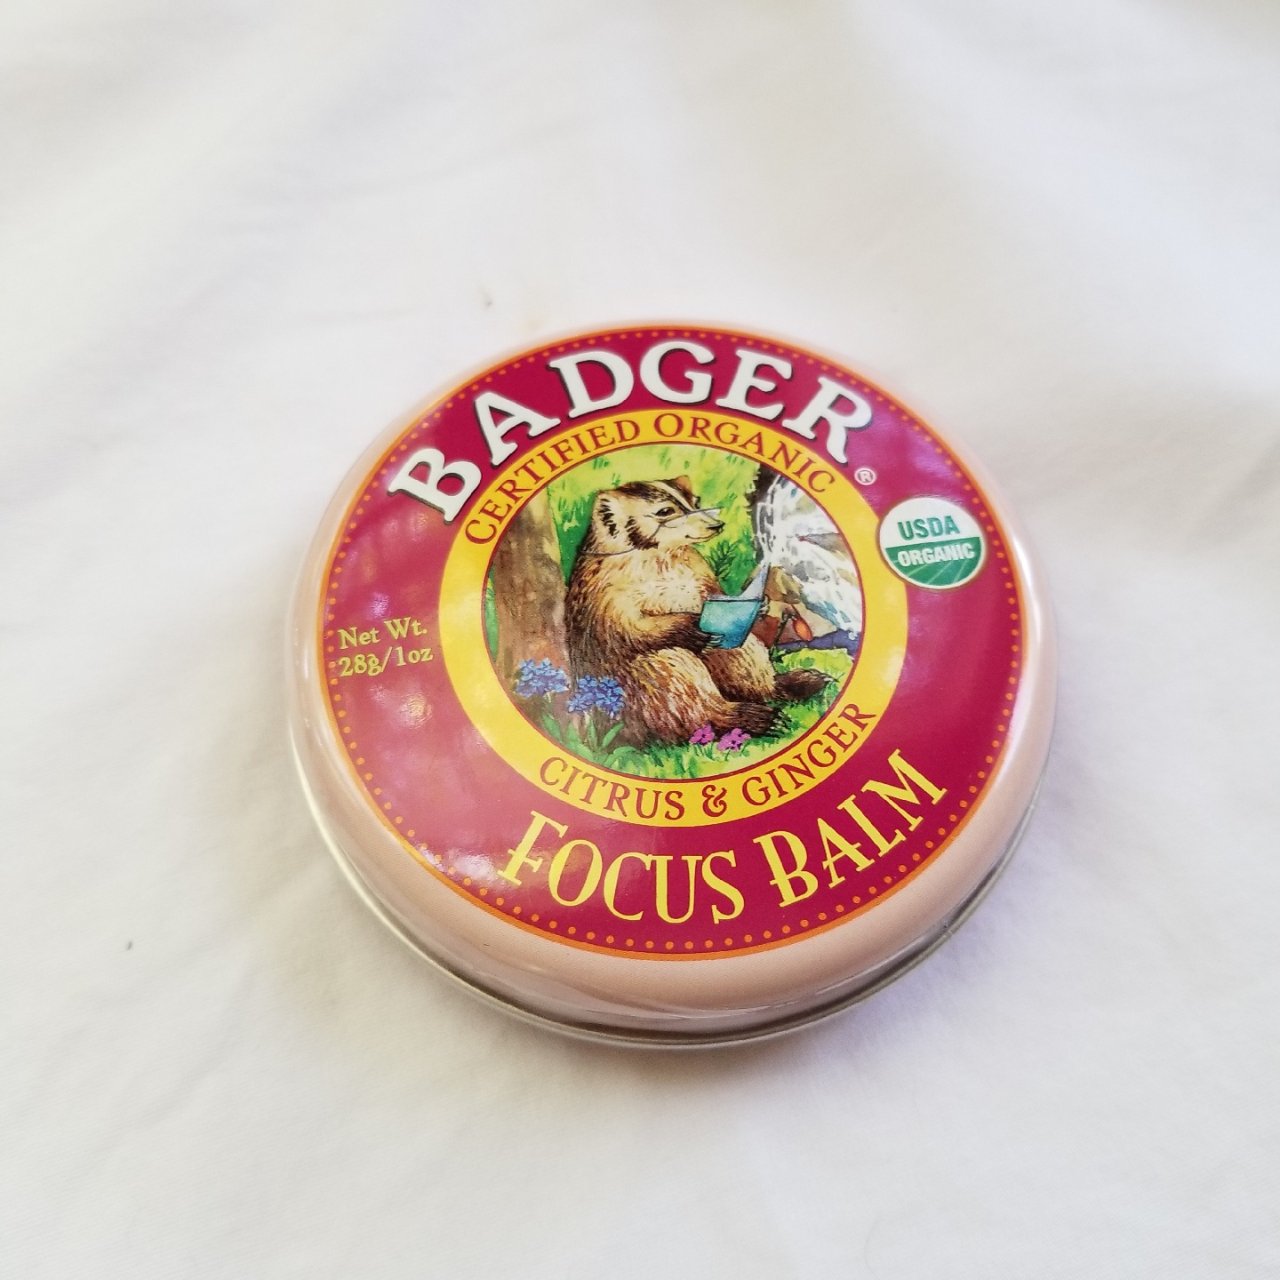 Badger,focus balm,4.99美元